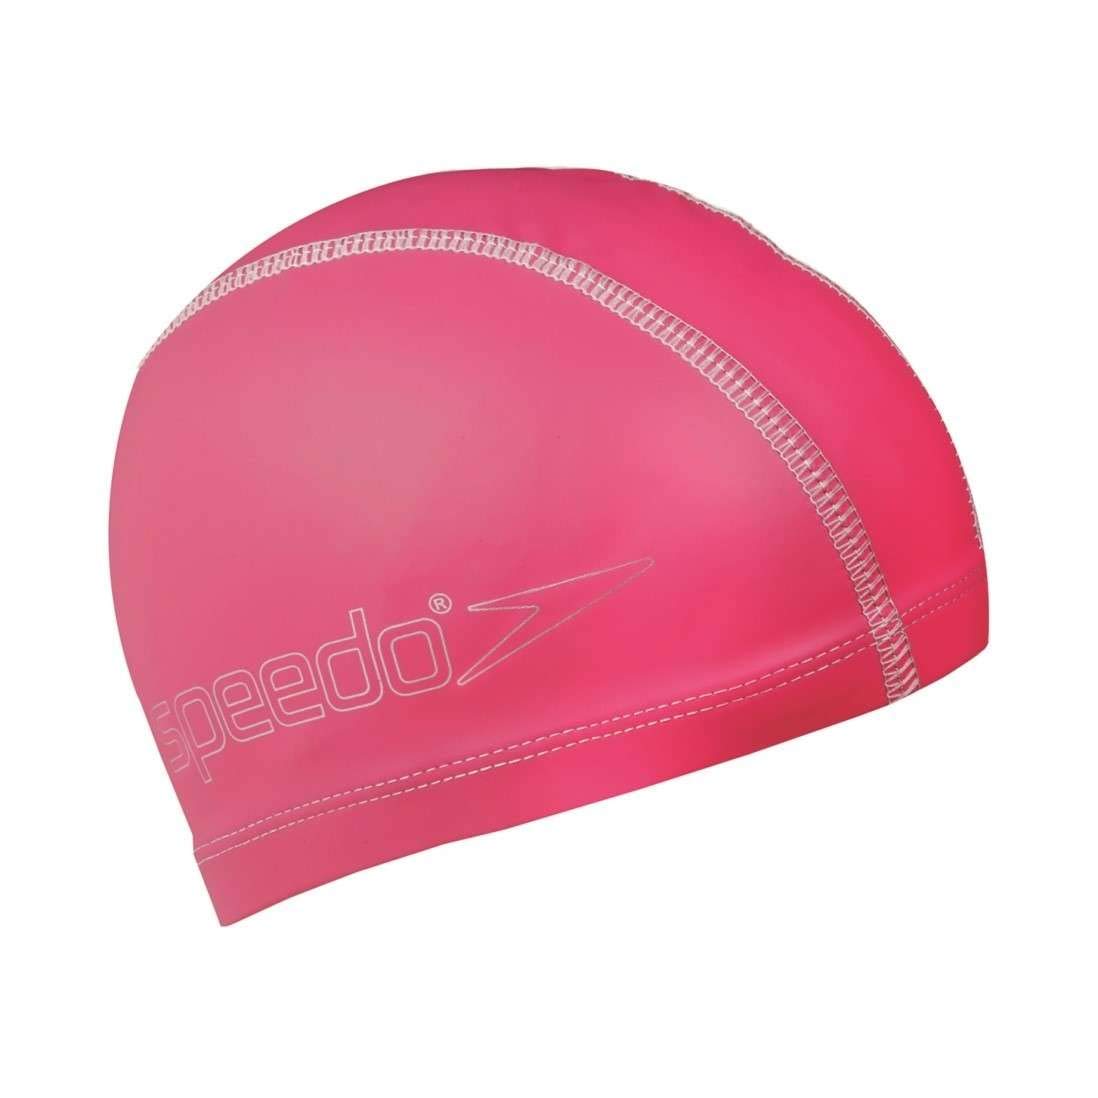 Speedo 8720731341 Nylon Pace Cap, 1SZ (Pink) - Best Price online Prokicksports.com